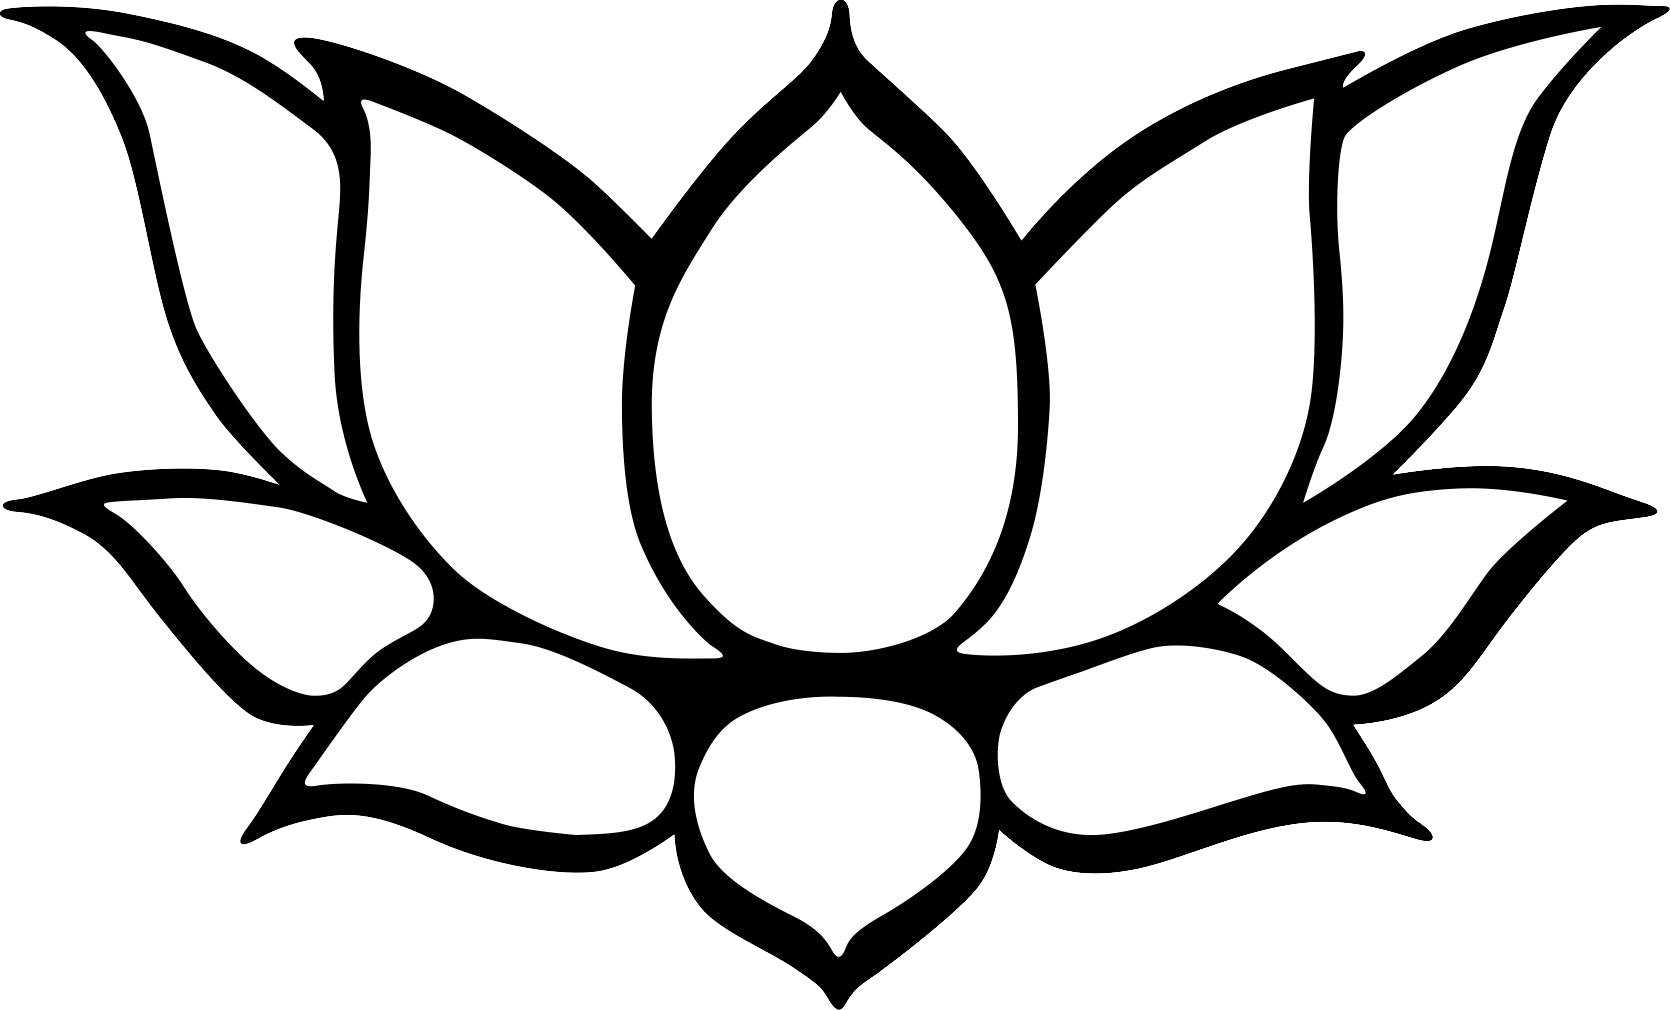 Meditation clipart lotus flower, Meditation lotus flower